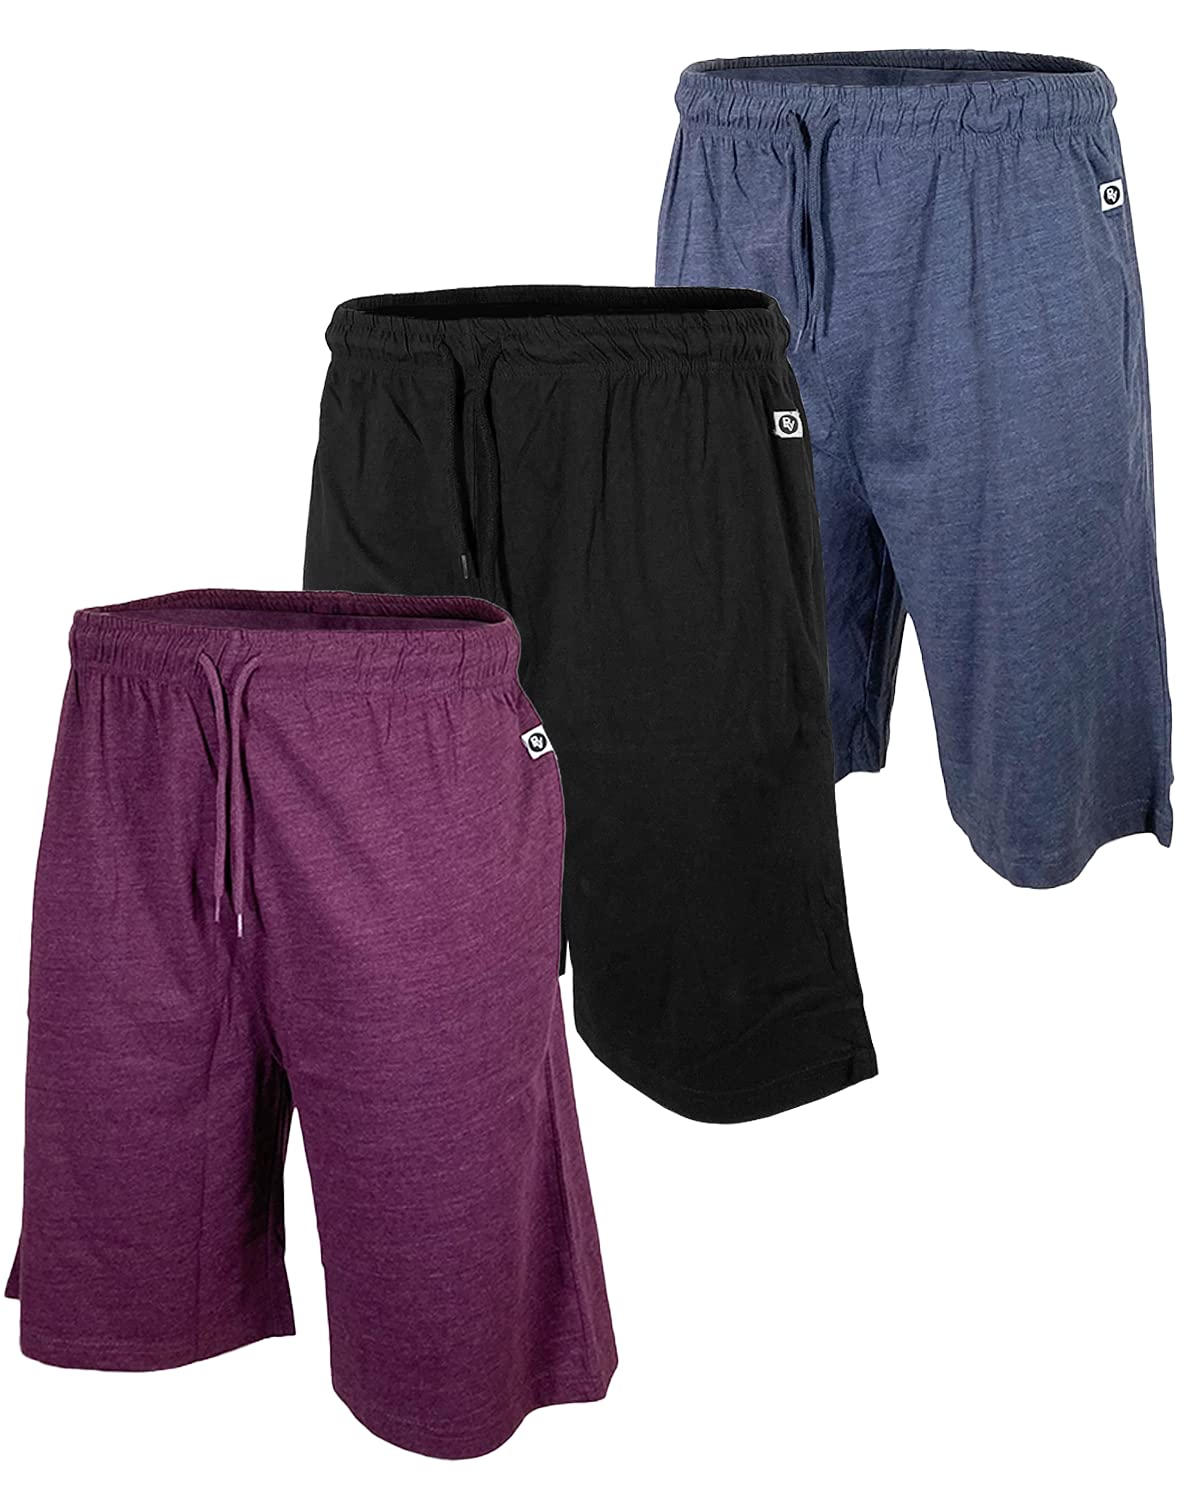 3-Pack Mens Sleep & Loungewear Shorts|Soft Comfortable Cotton|Drawstring Pull|Pockets|Many Colors|Small-3XL